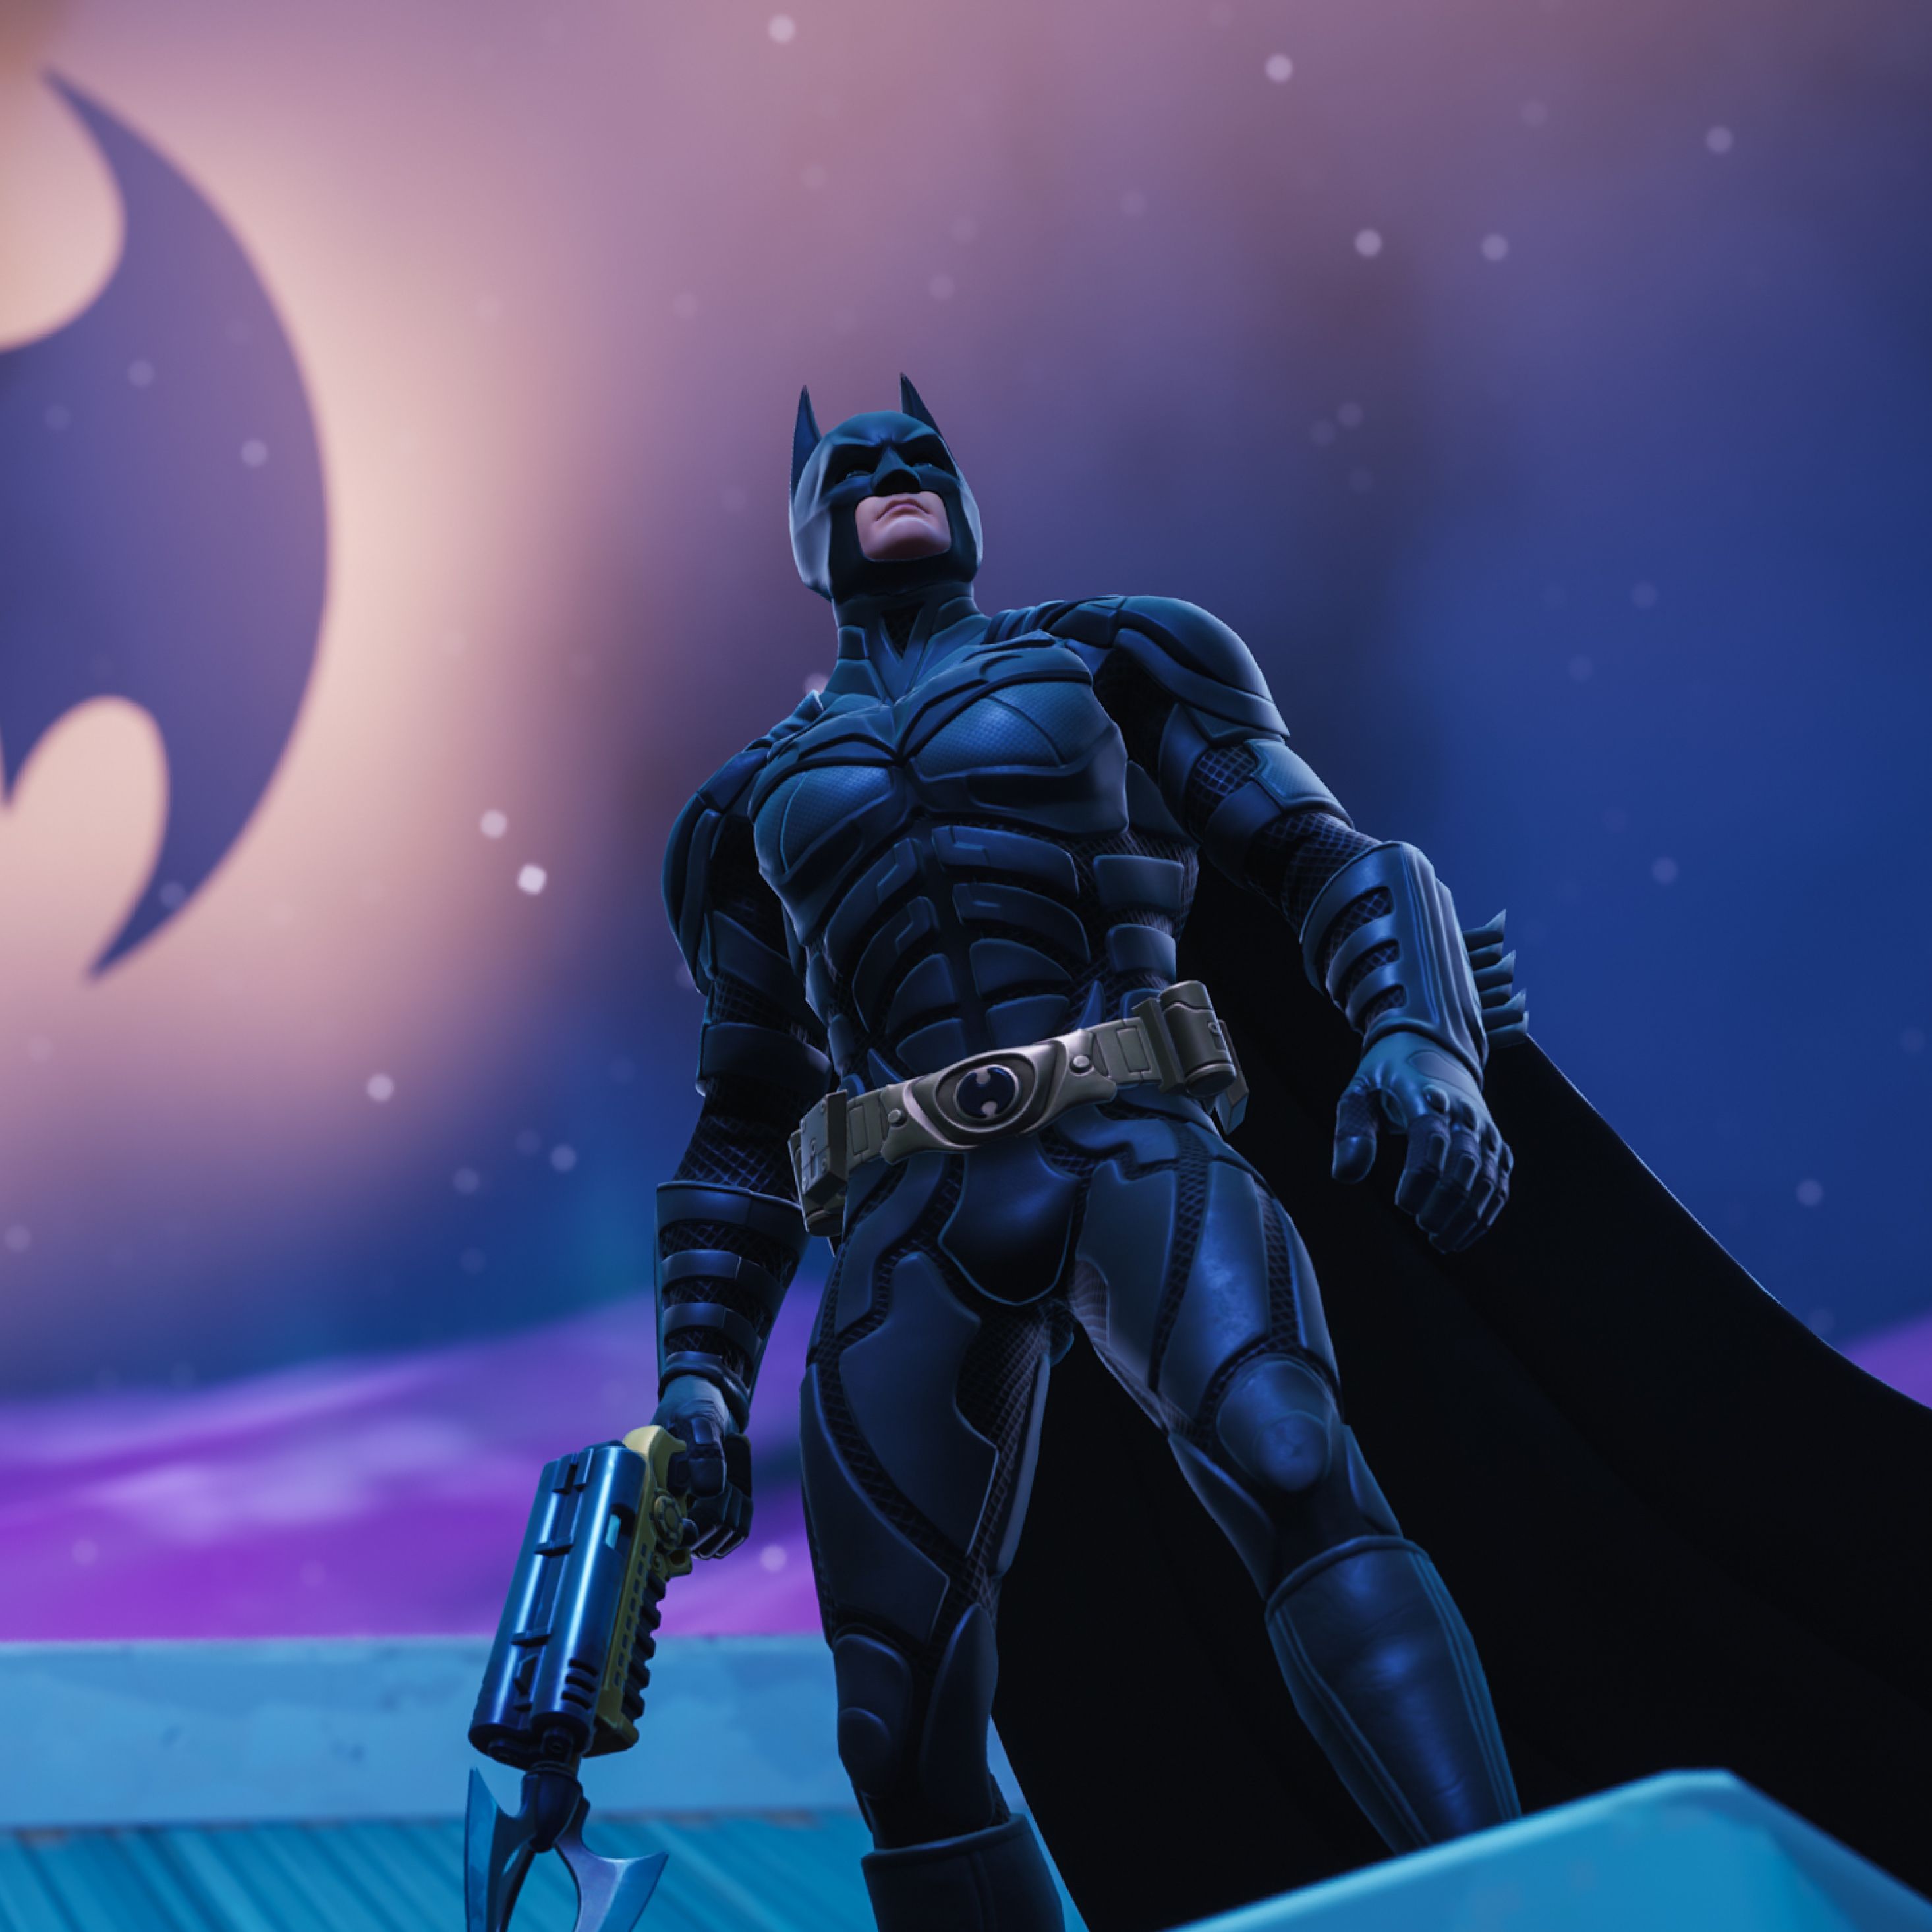 Fortnite X Batman iPad Pro Retina Display Wallpaper, HD Games 4K Wallpaper, Image, Photo and Background